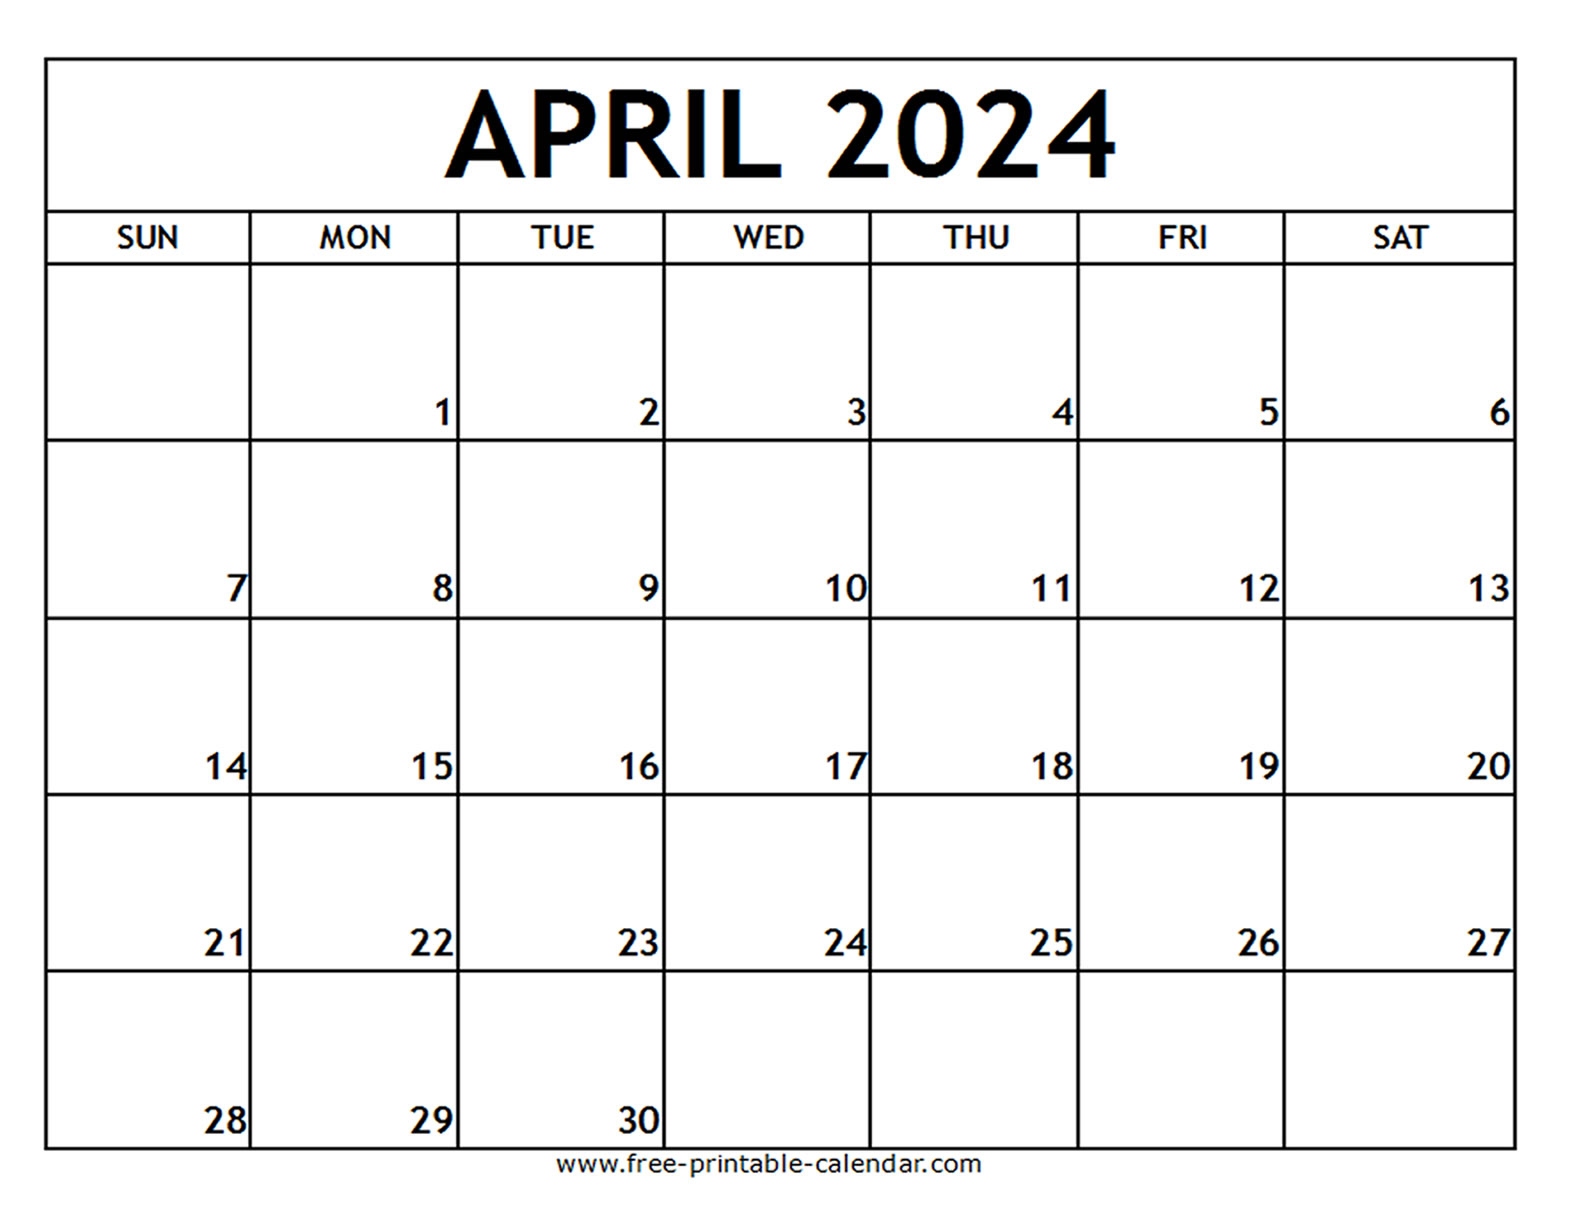 April 2024 Printable Calendar - Free-Printable-Calendar with regard to Free Printable April 2024 Monthly Calendar